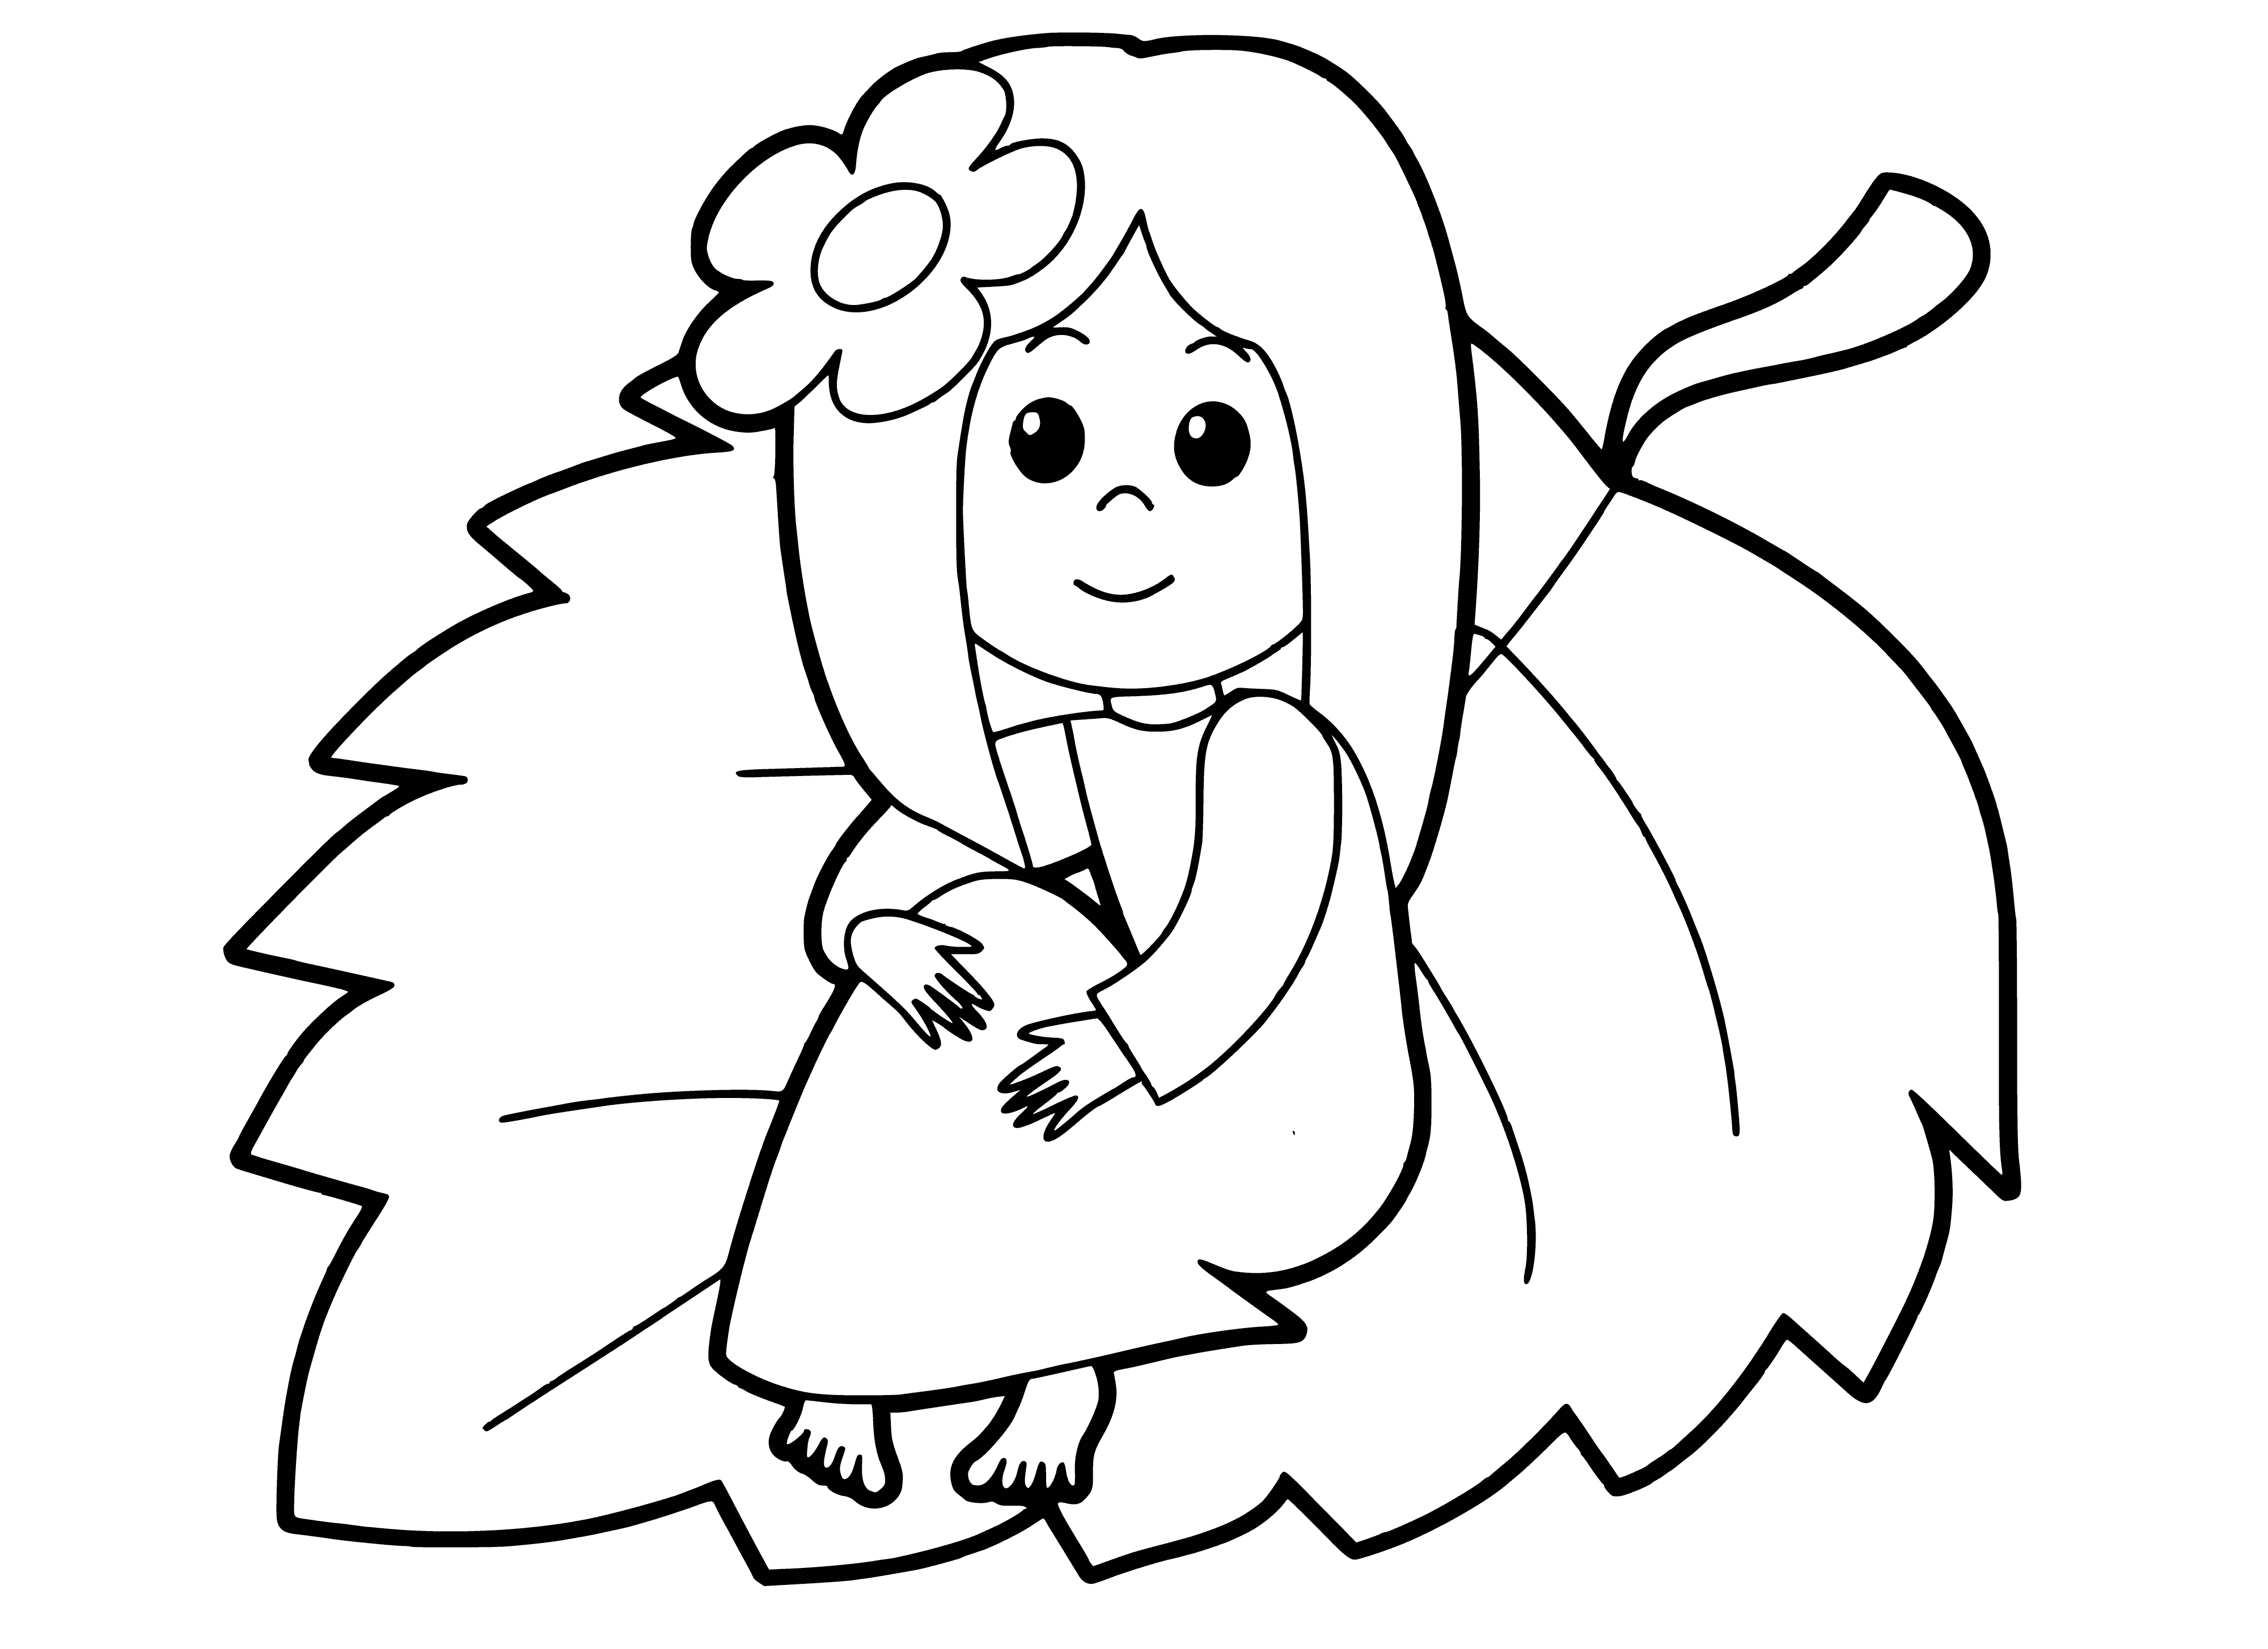 Thumbelina Girl coloring page